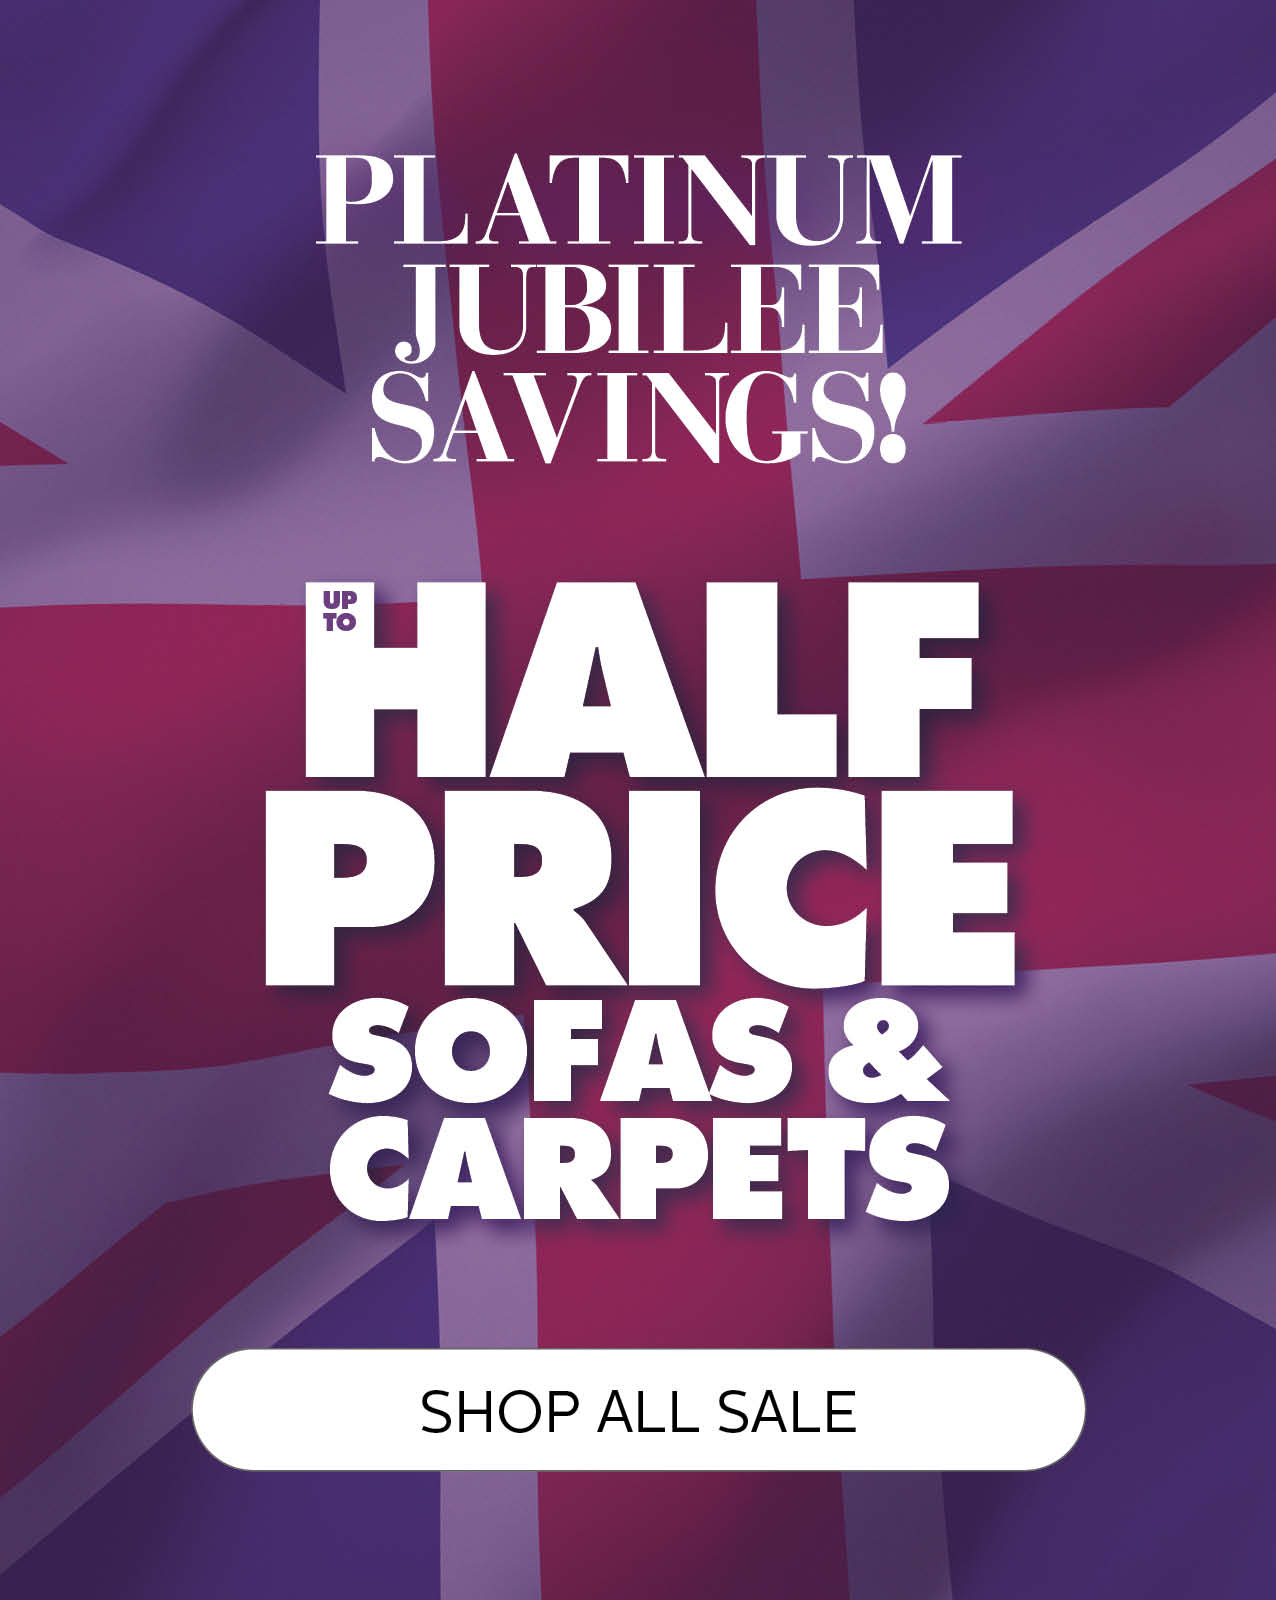 Jubilee Savings - Up to half price sofas and carpets